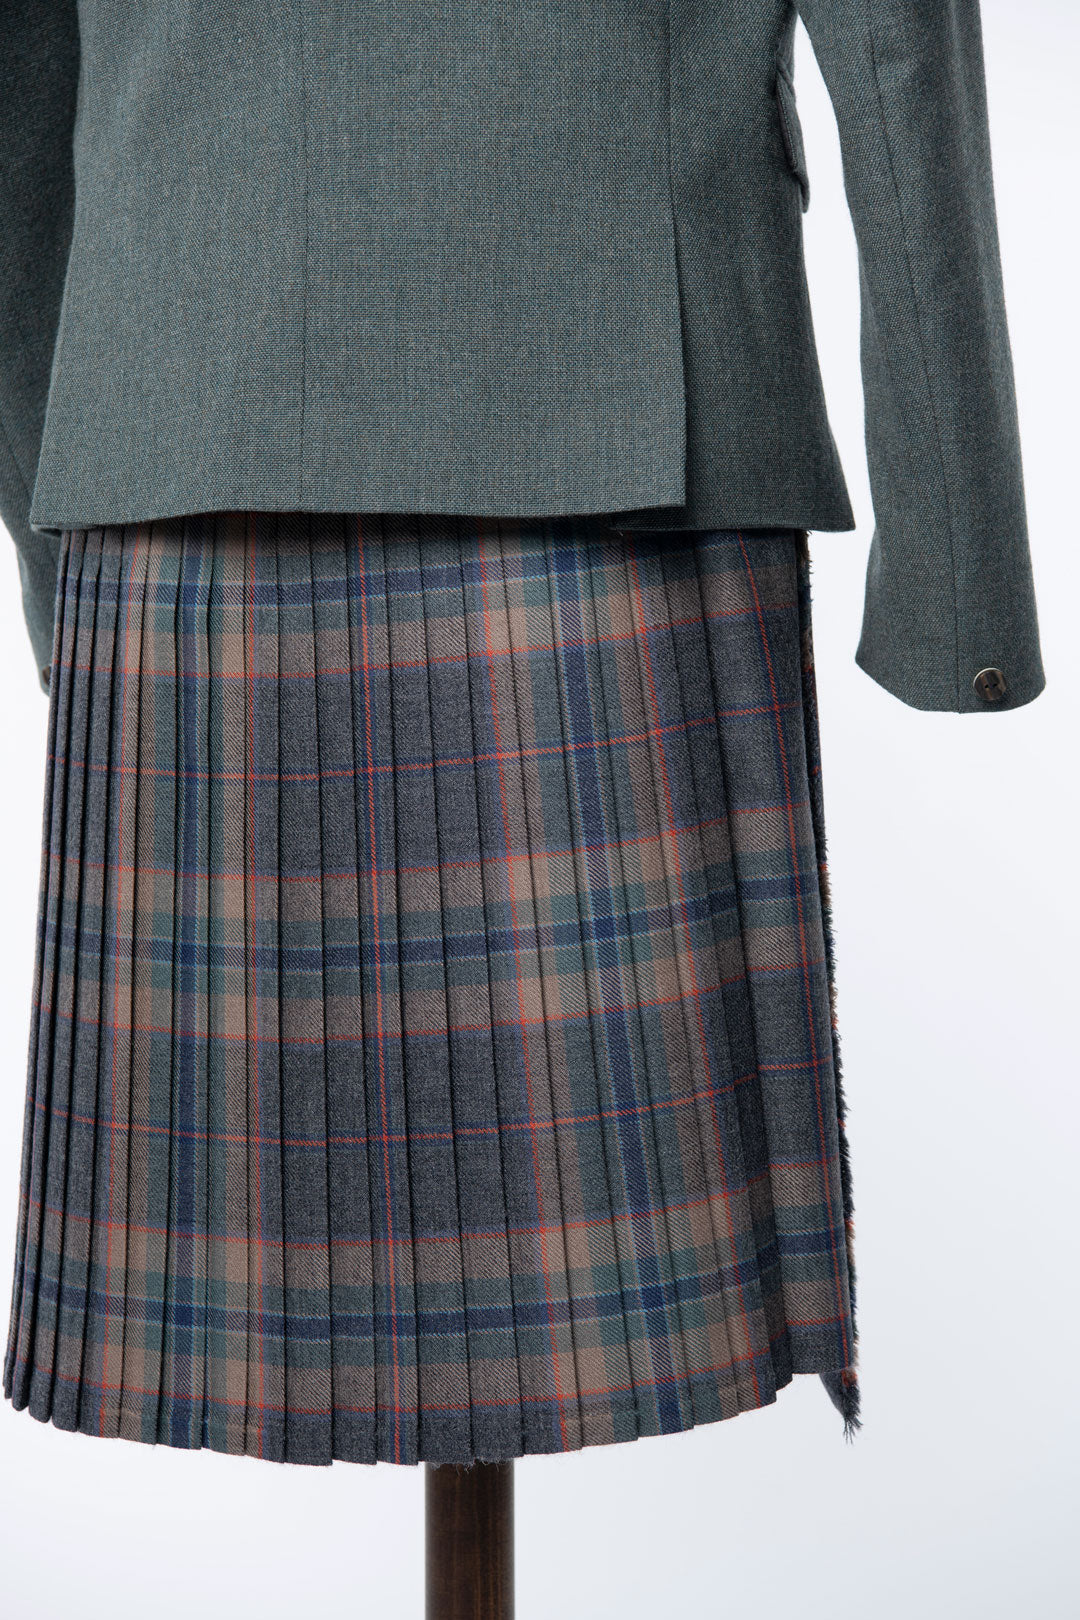 Tarbert Tweed Kilt Outfit - MacGregor and MacDuff